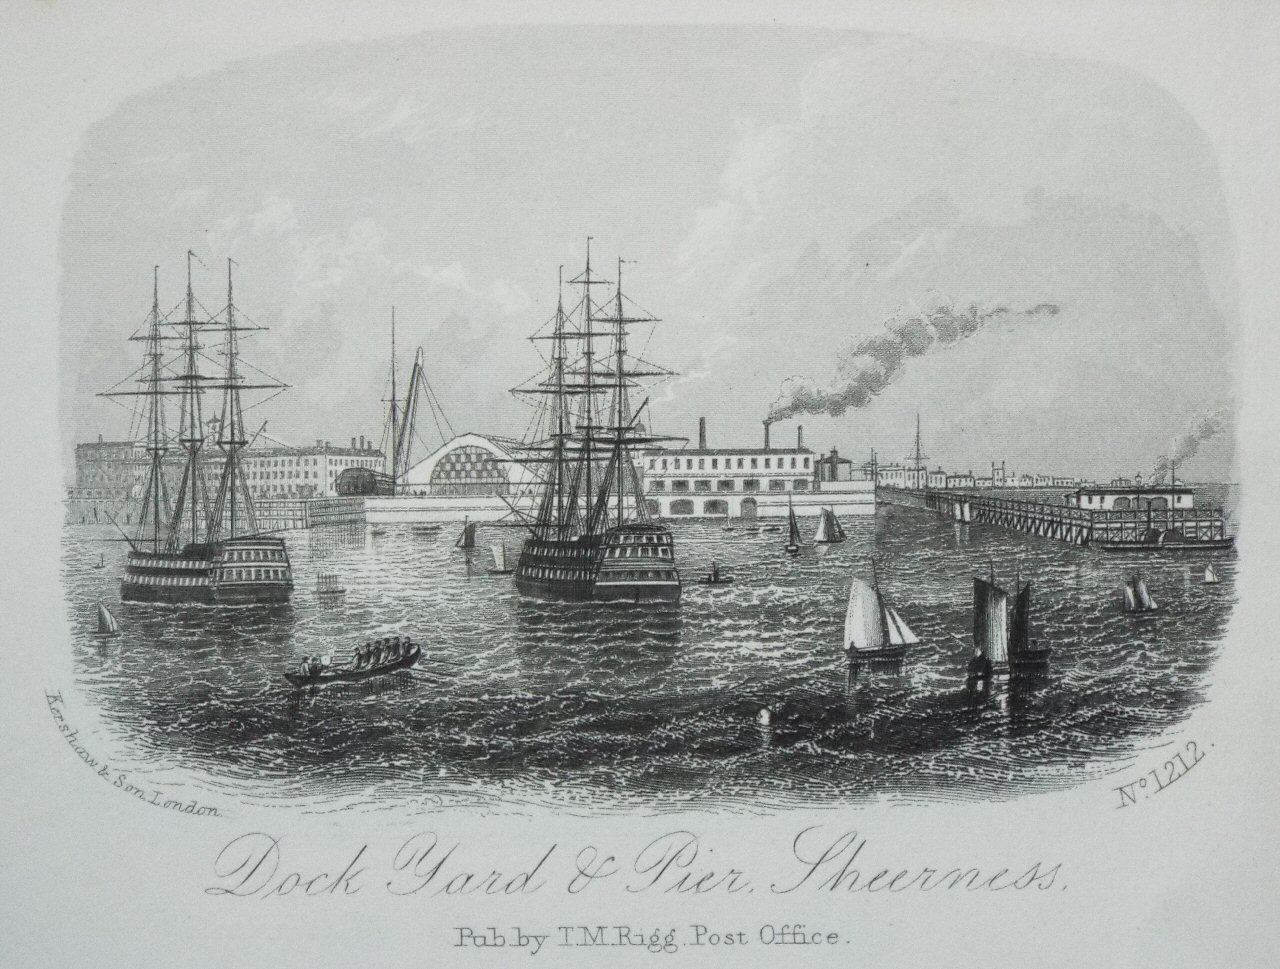 Steel Vignette - Dock Yard & Pier, Sheerness. - Kershaw